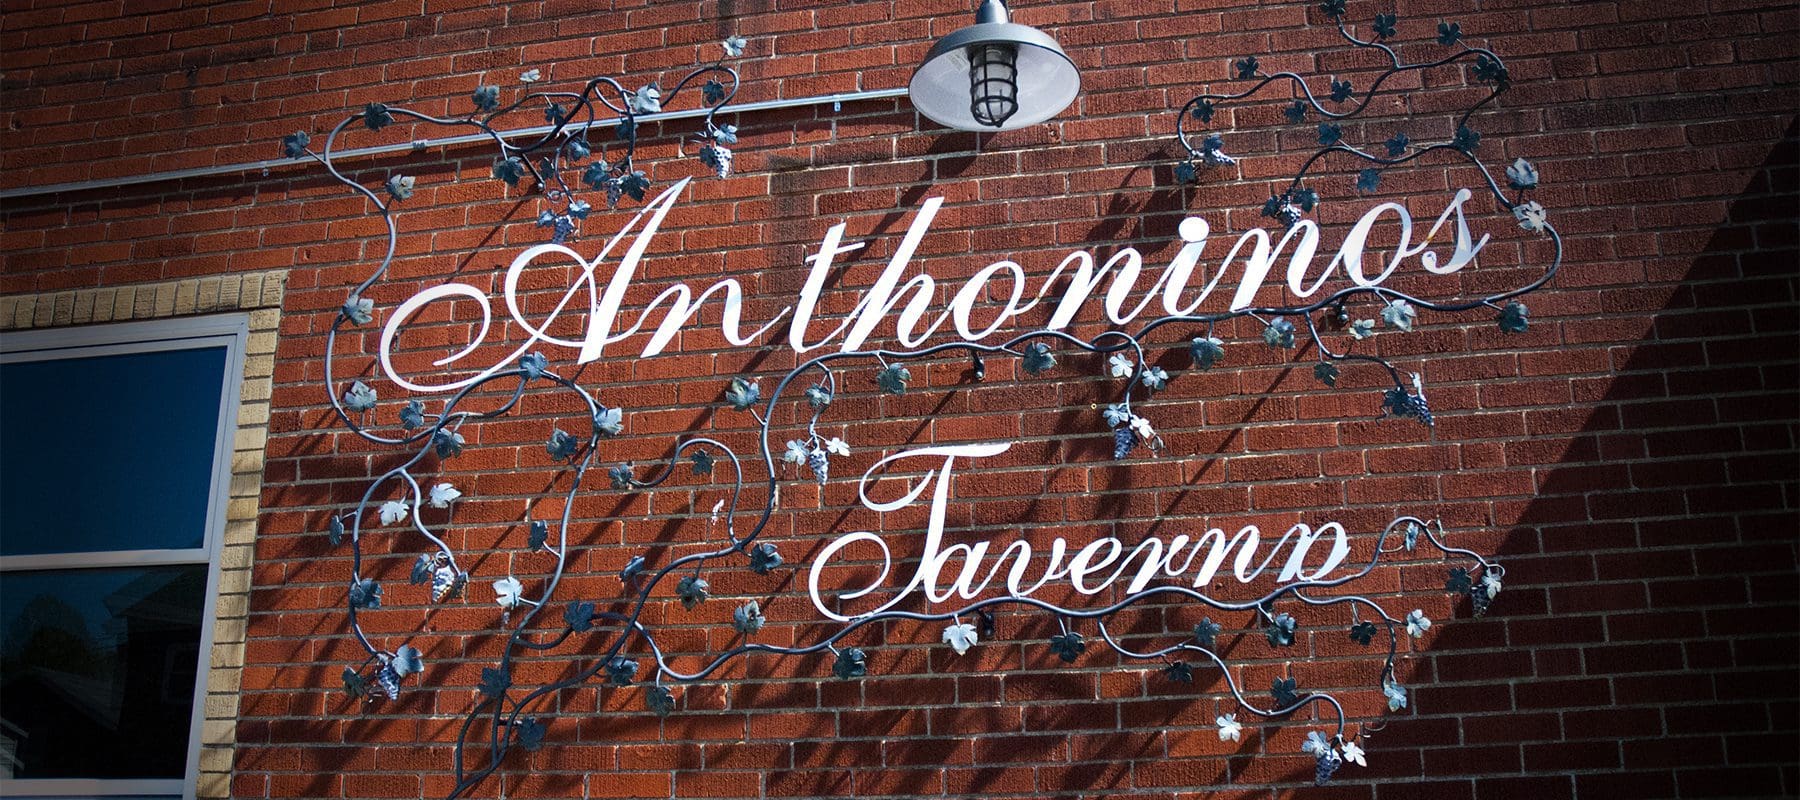 Anthonino's Sign - Distinctive signage of Anthonino's